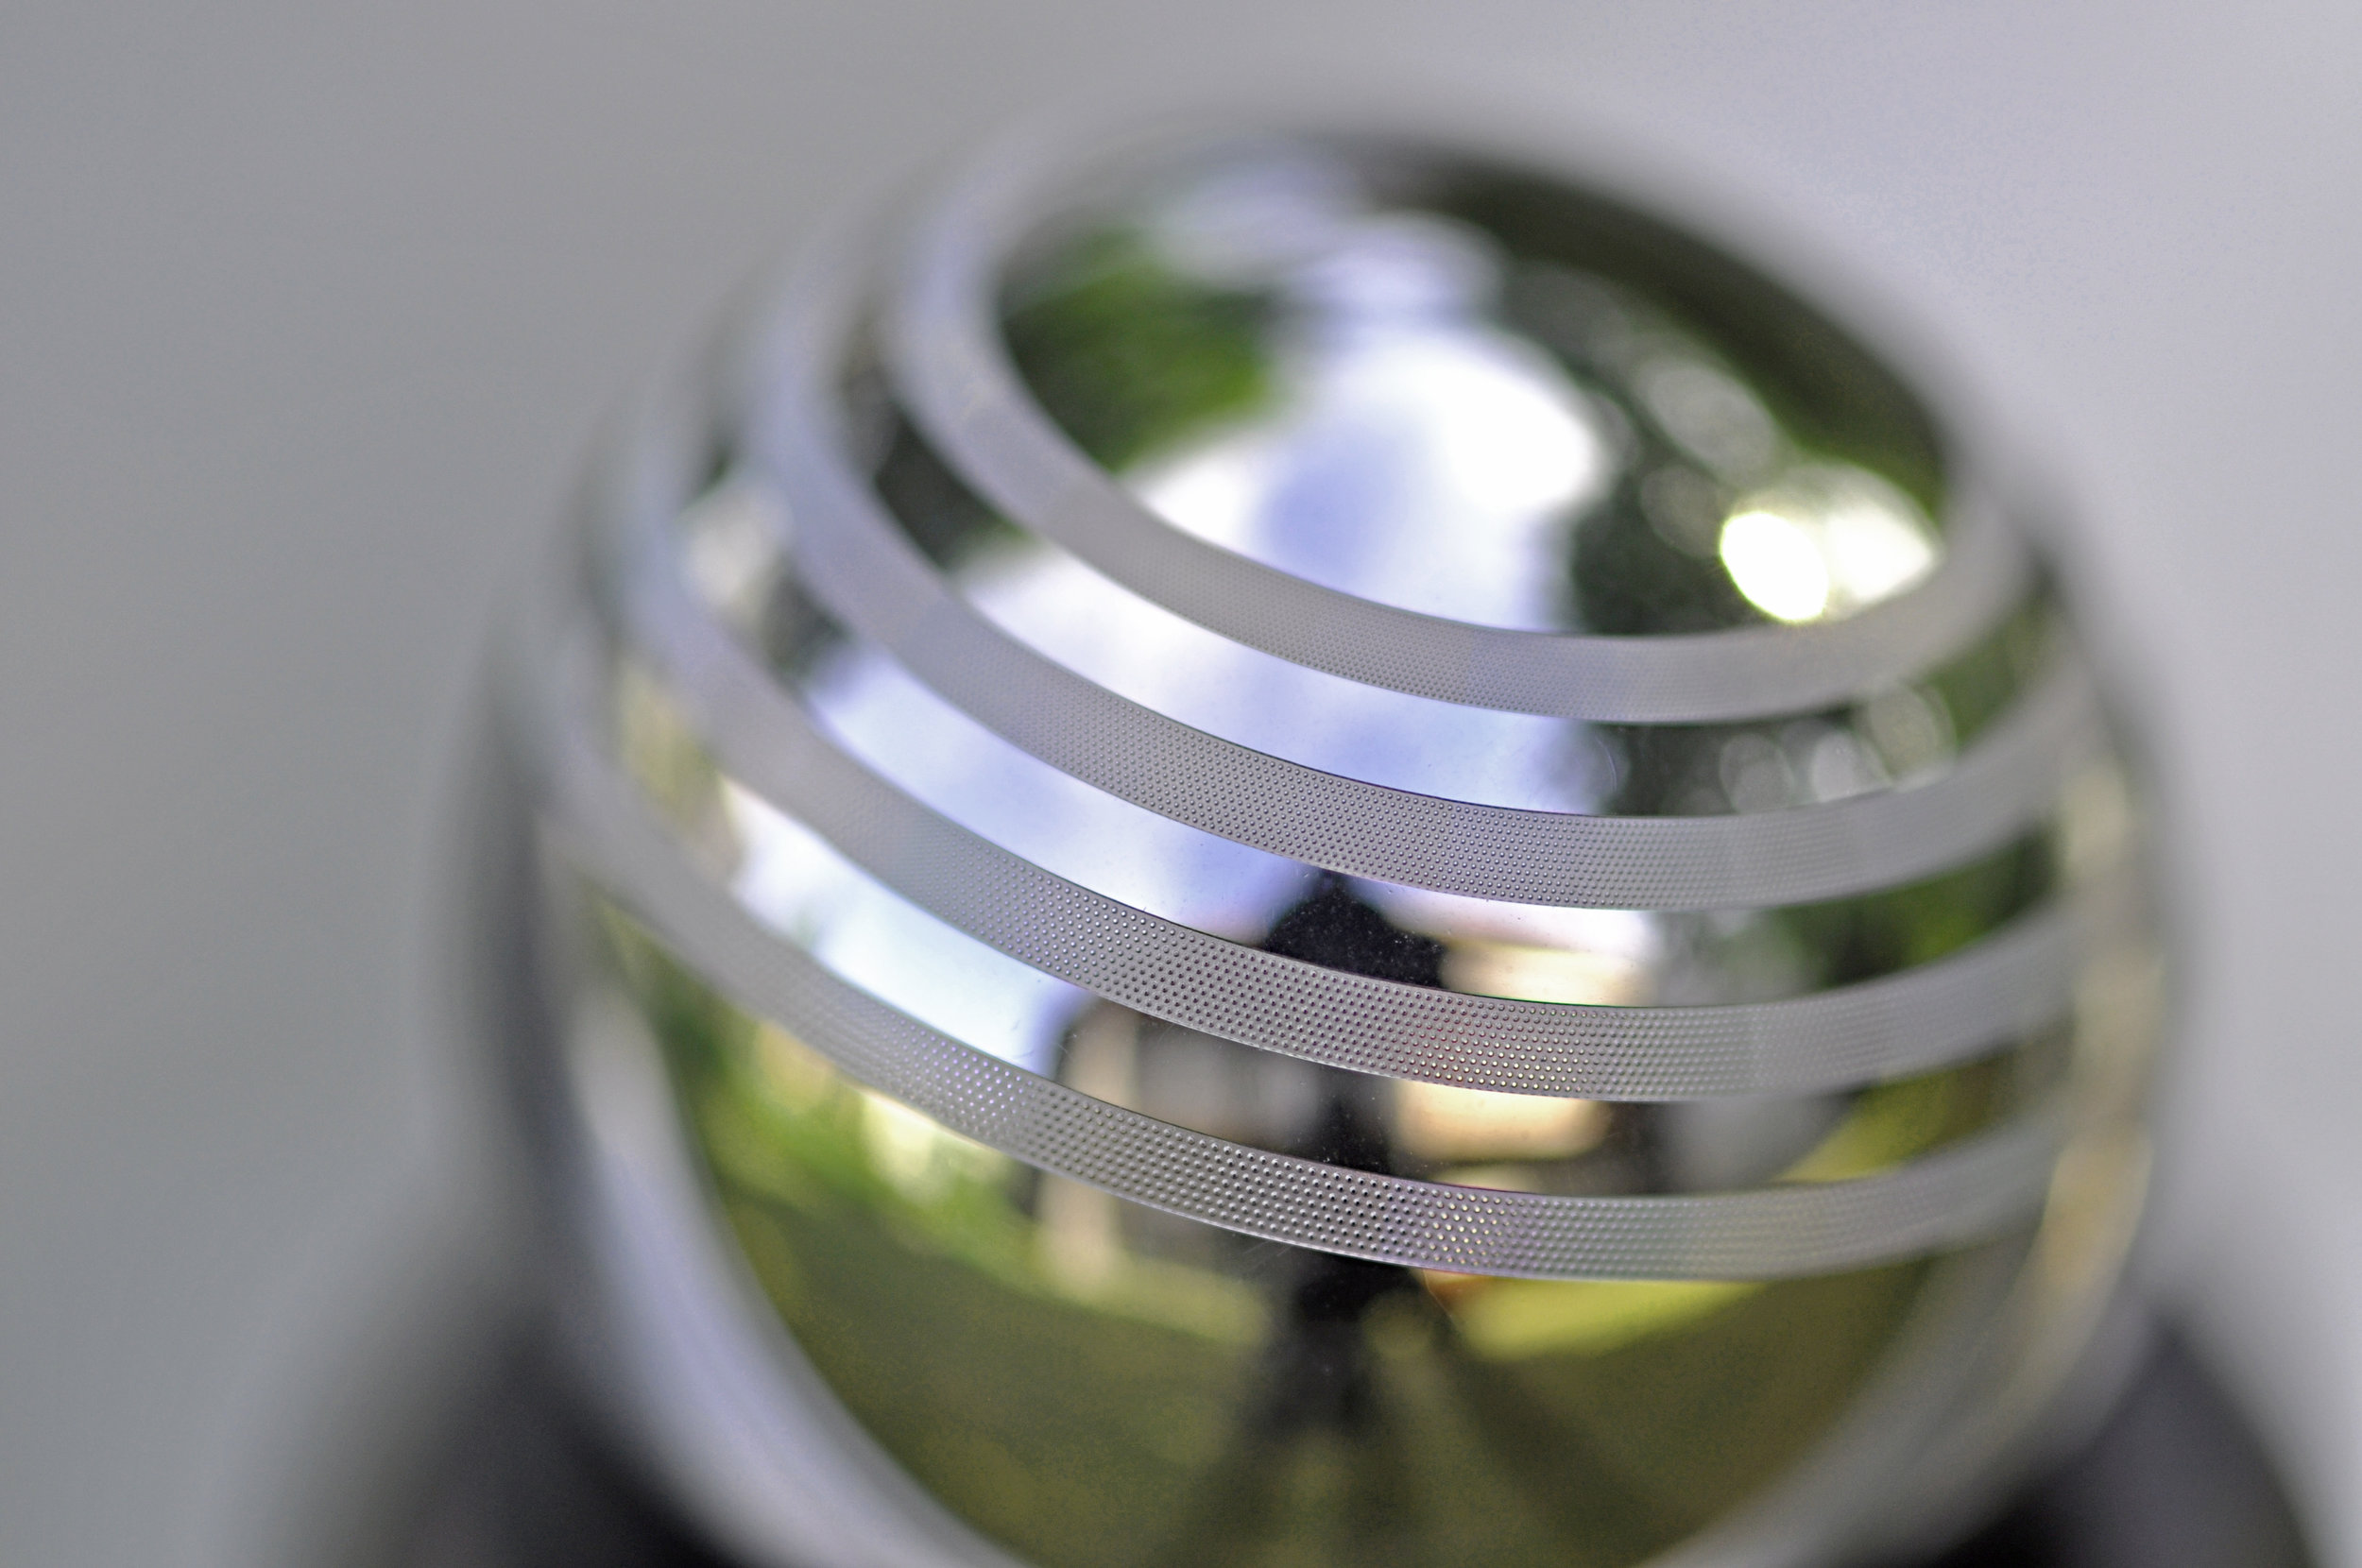  Textured rings on a 20 mm diameter hardmetal ball. 